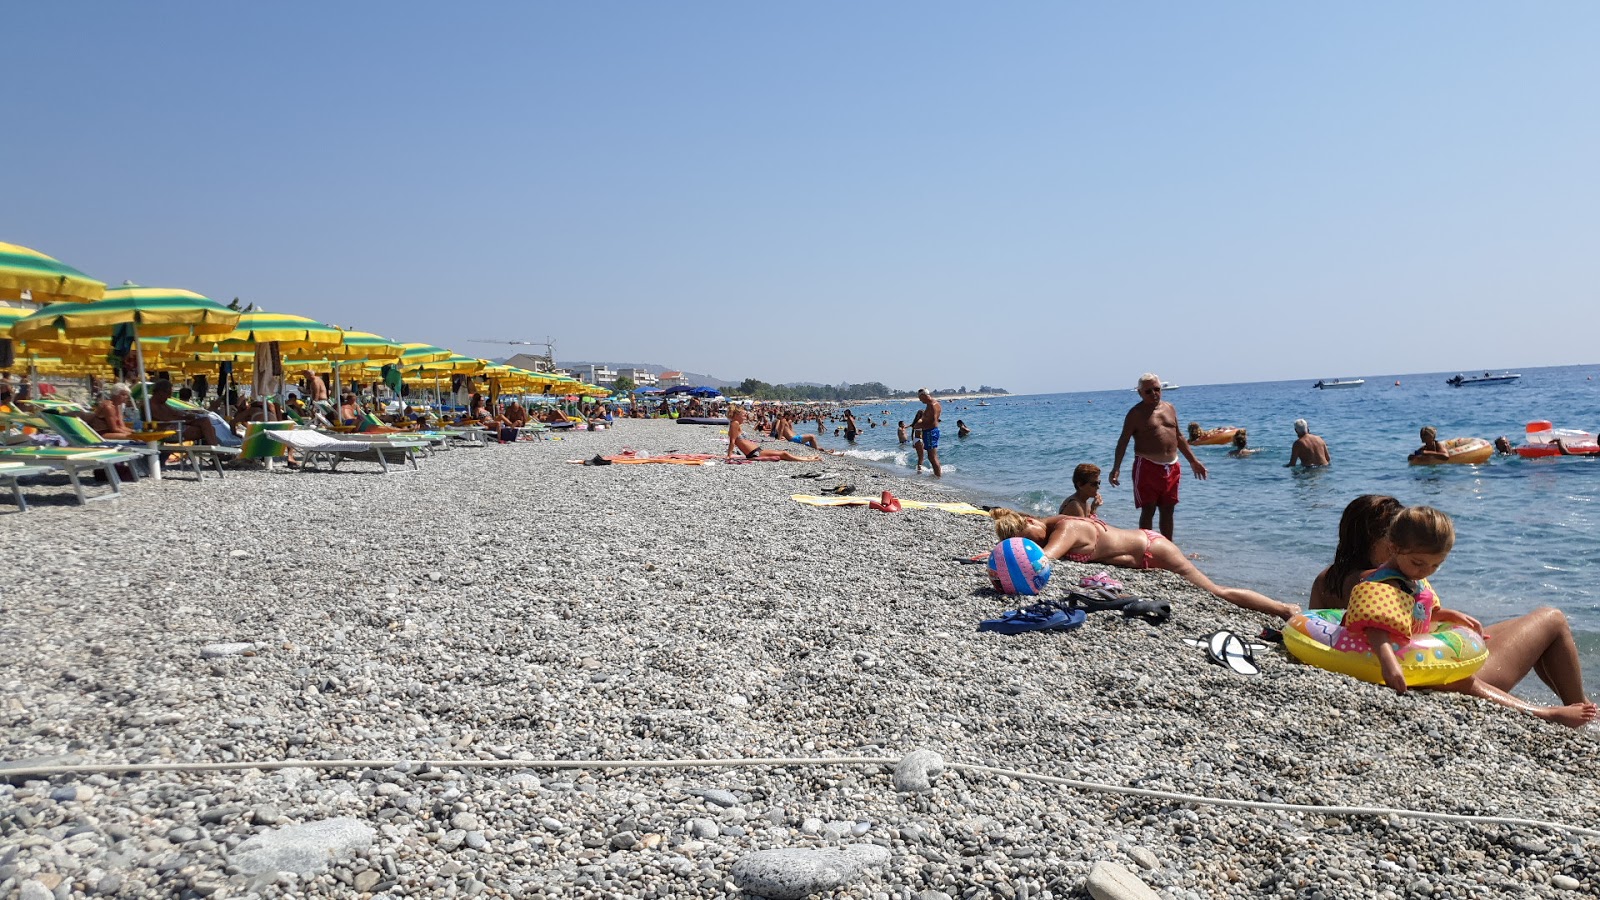 Fotografie cu Gioiosa Jonica beach cu nivelul de curățenie in medie